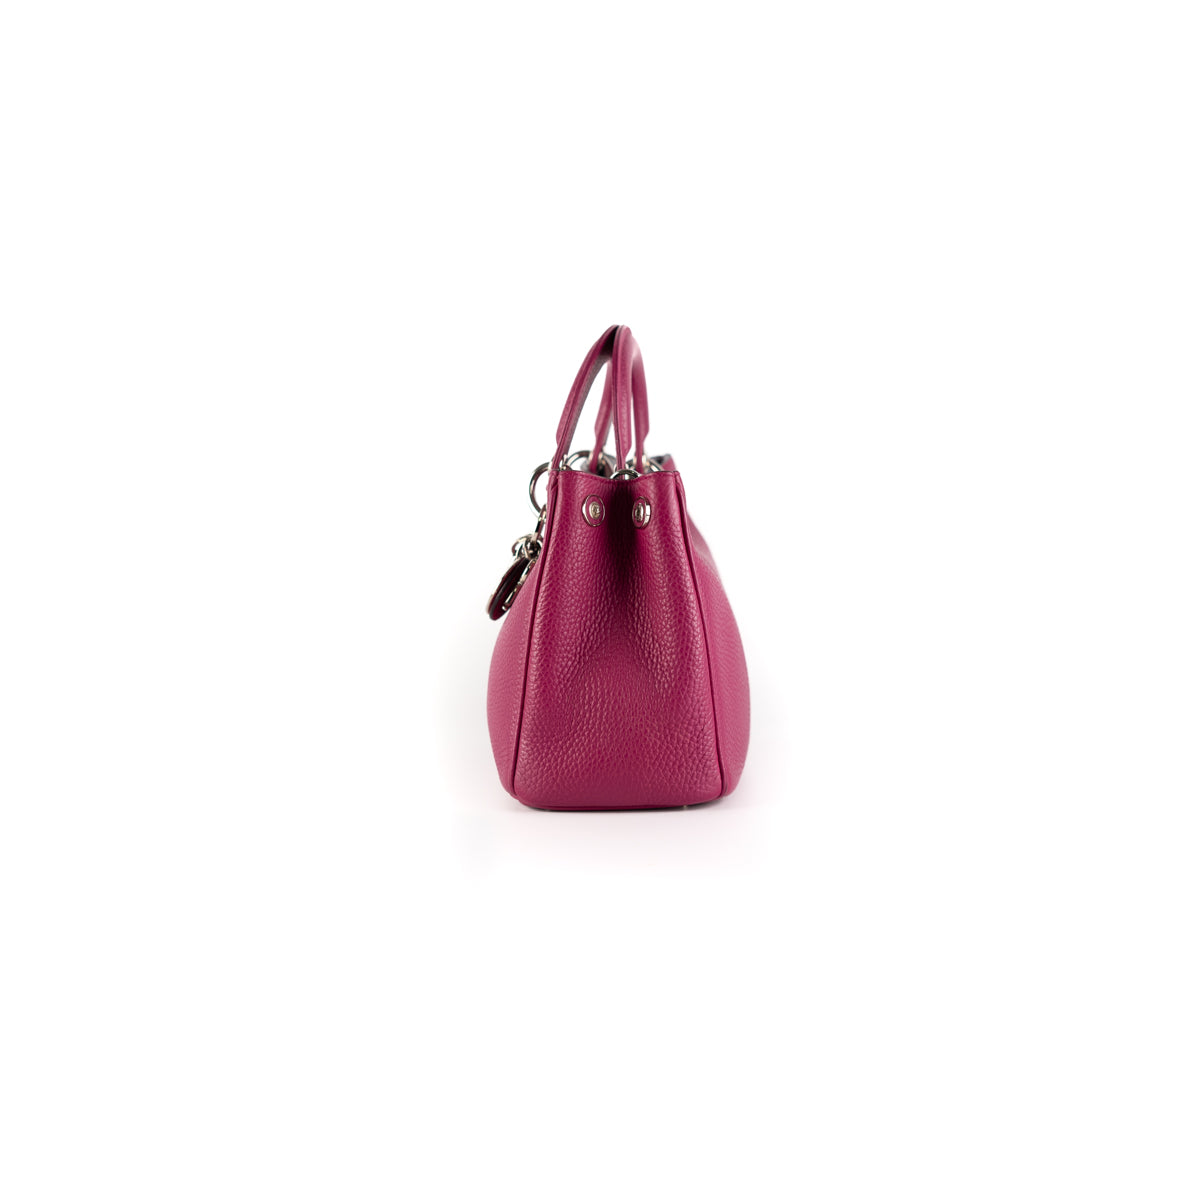 Dior Vintage Diorissimo Trotter Pochette Bag Pink - THE PURSE AFFAIR